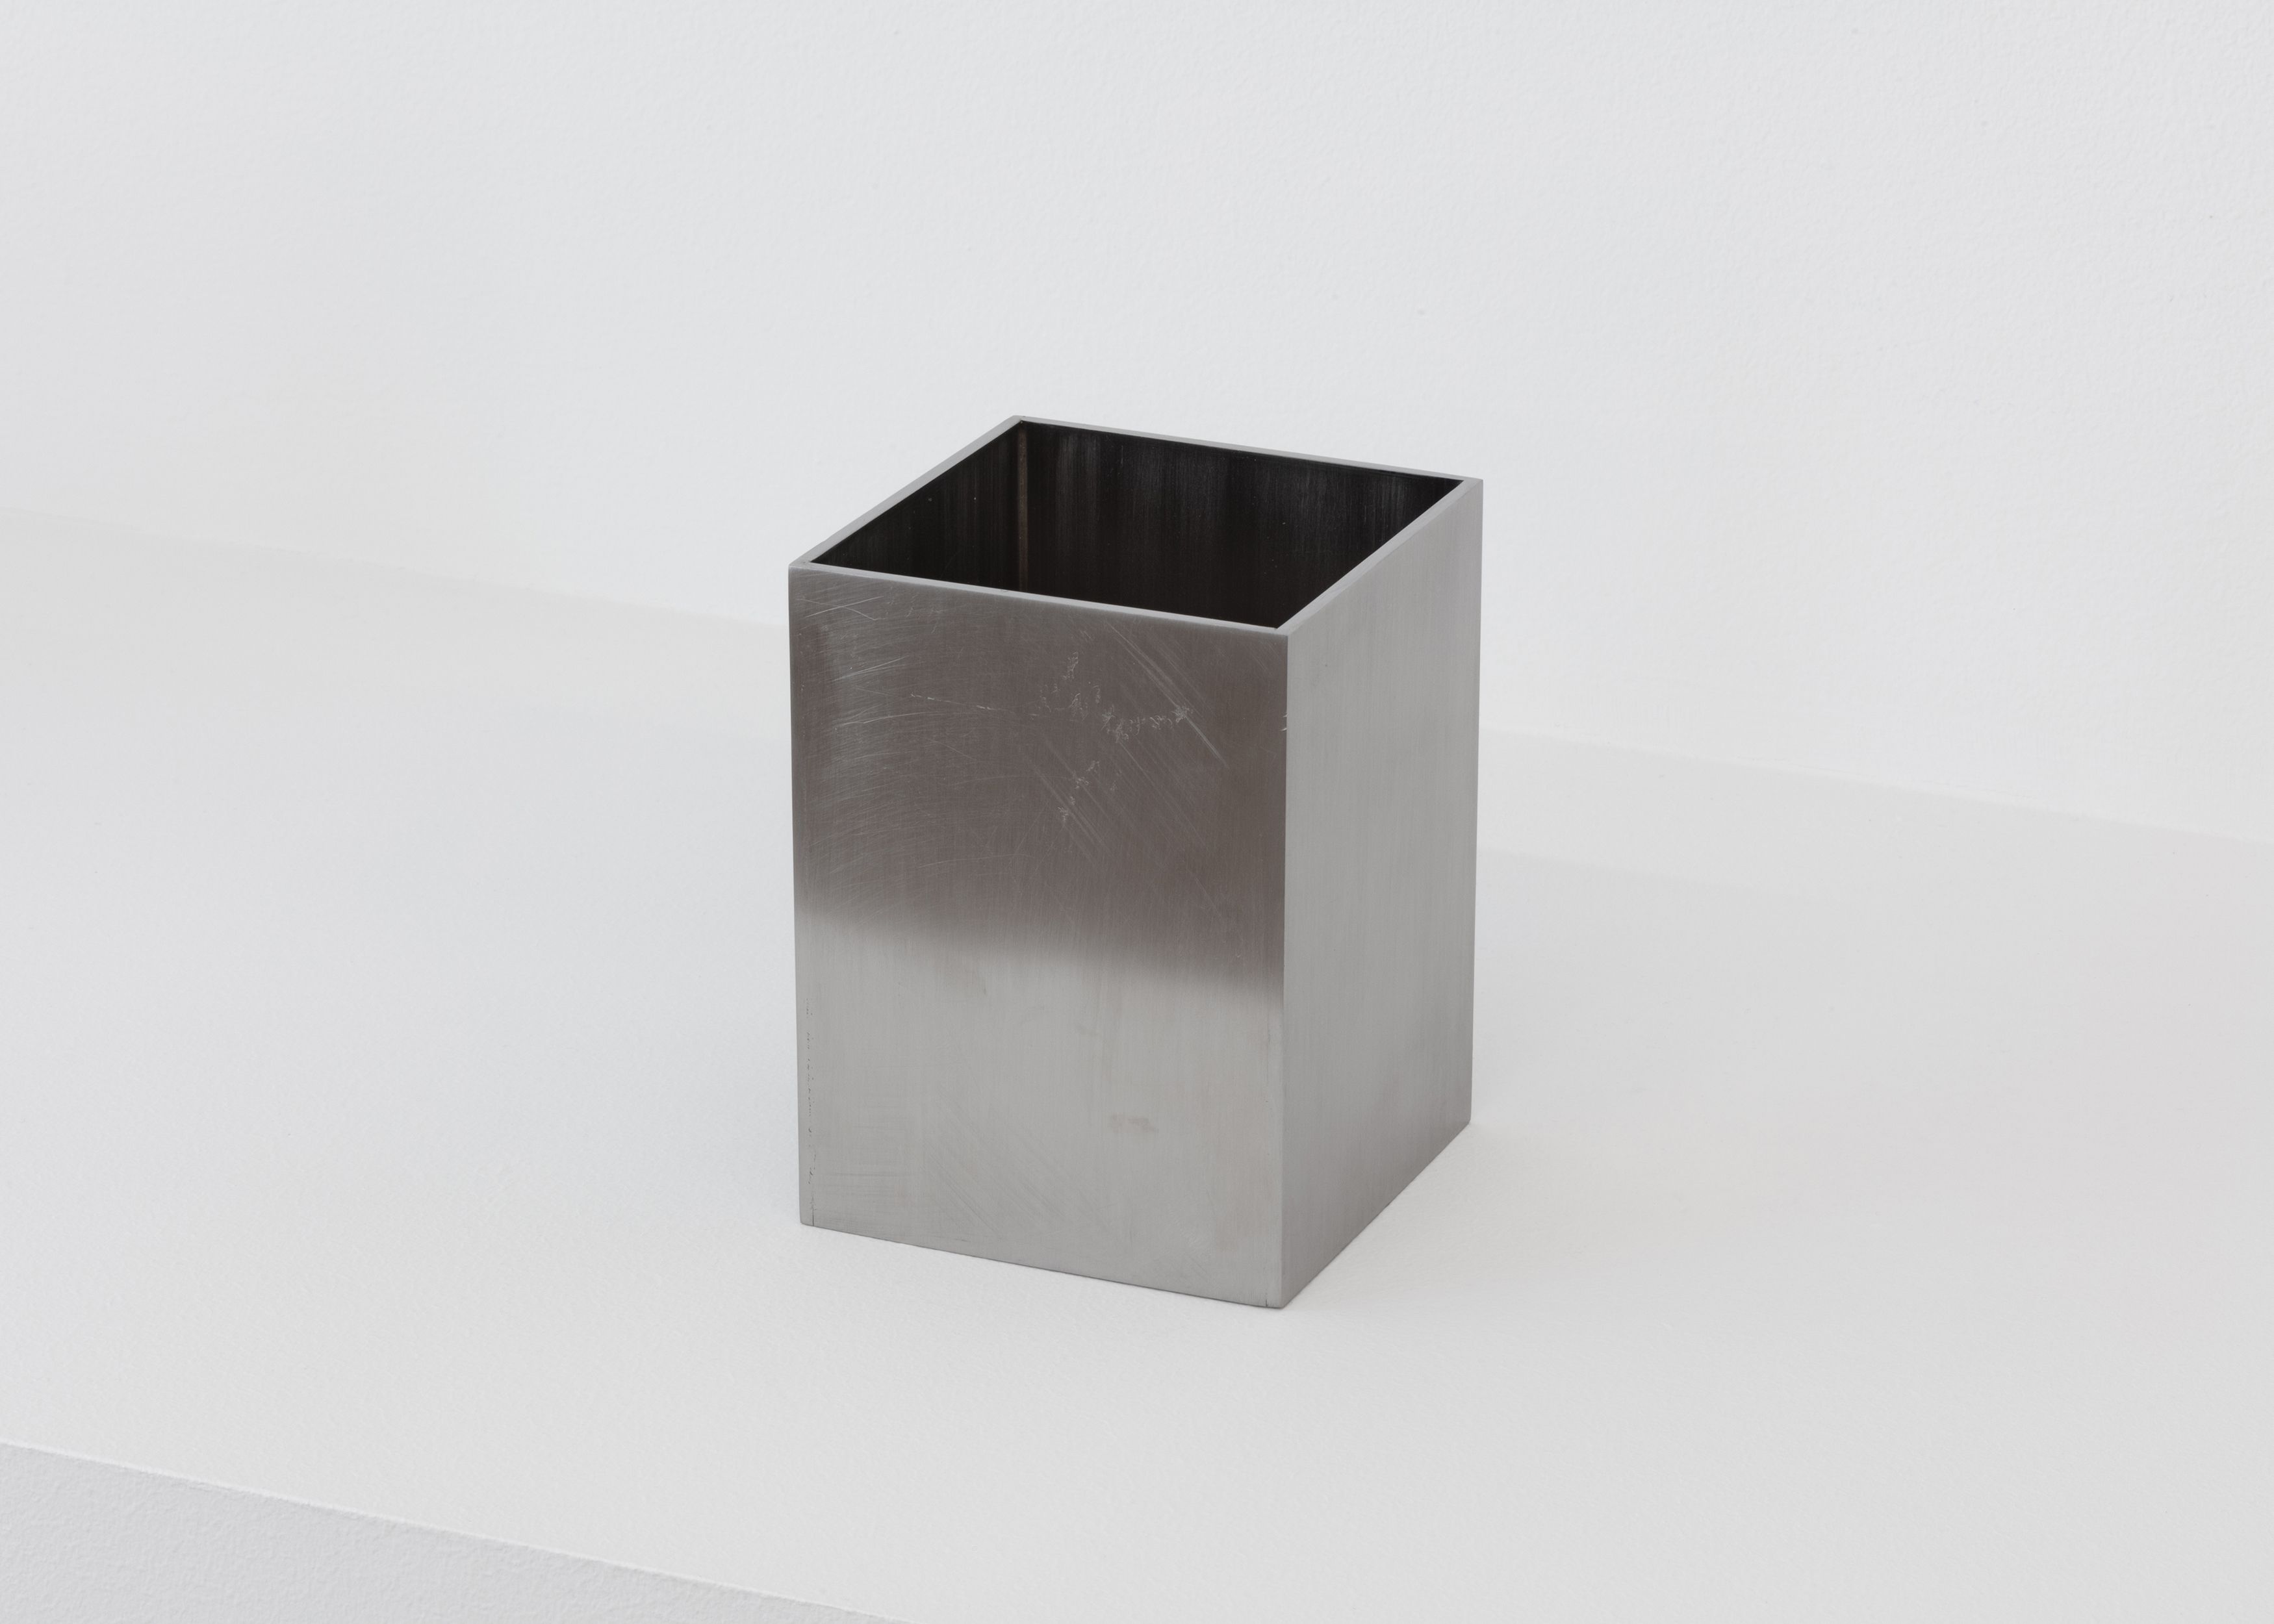 Stephen Lichty, Form 10, 2021, stainless steel, 4 x 3 x 3 in. (10.16 x 7.62 x 7.62 cm)